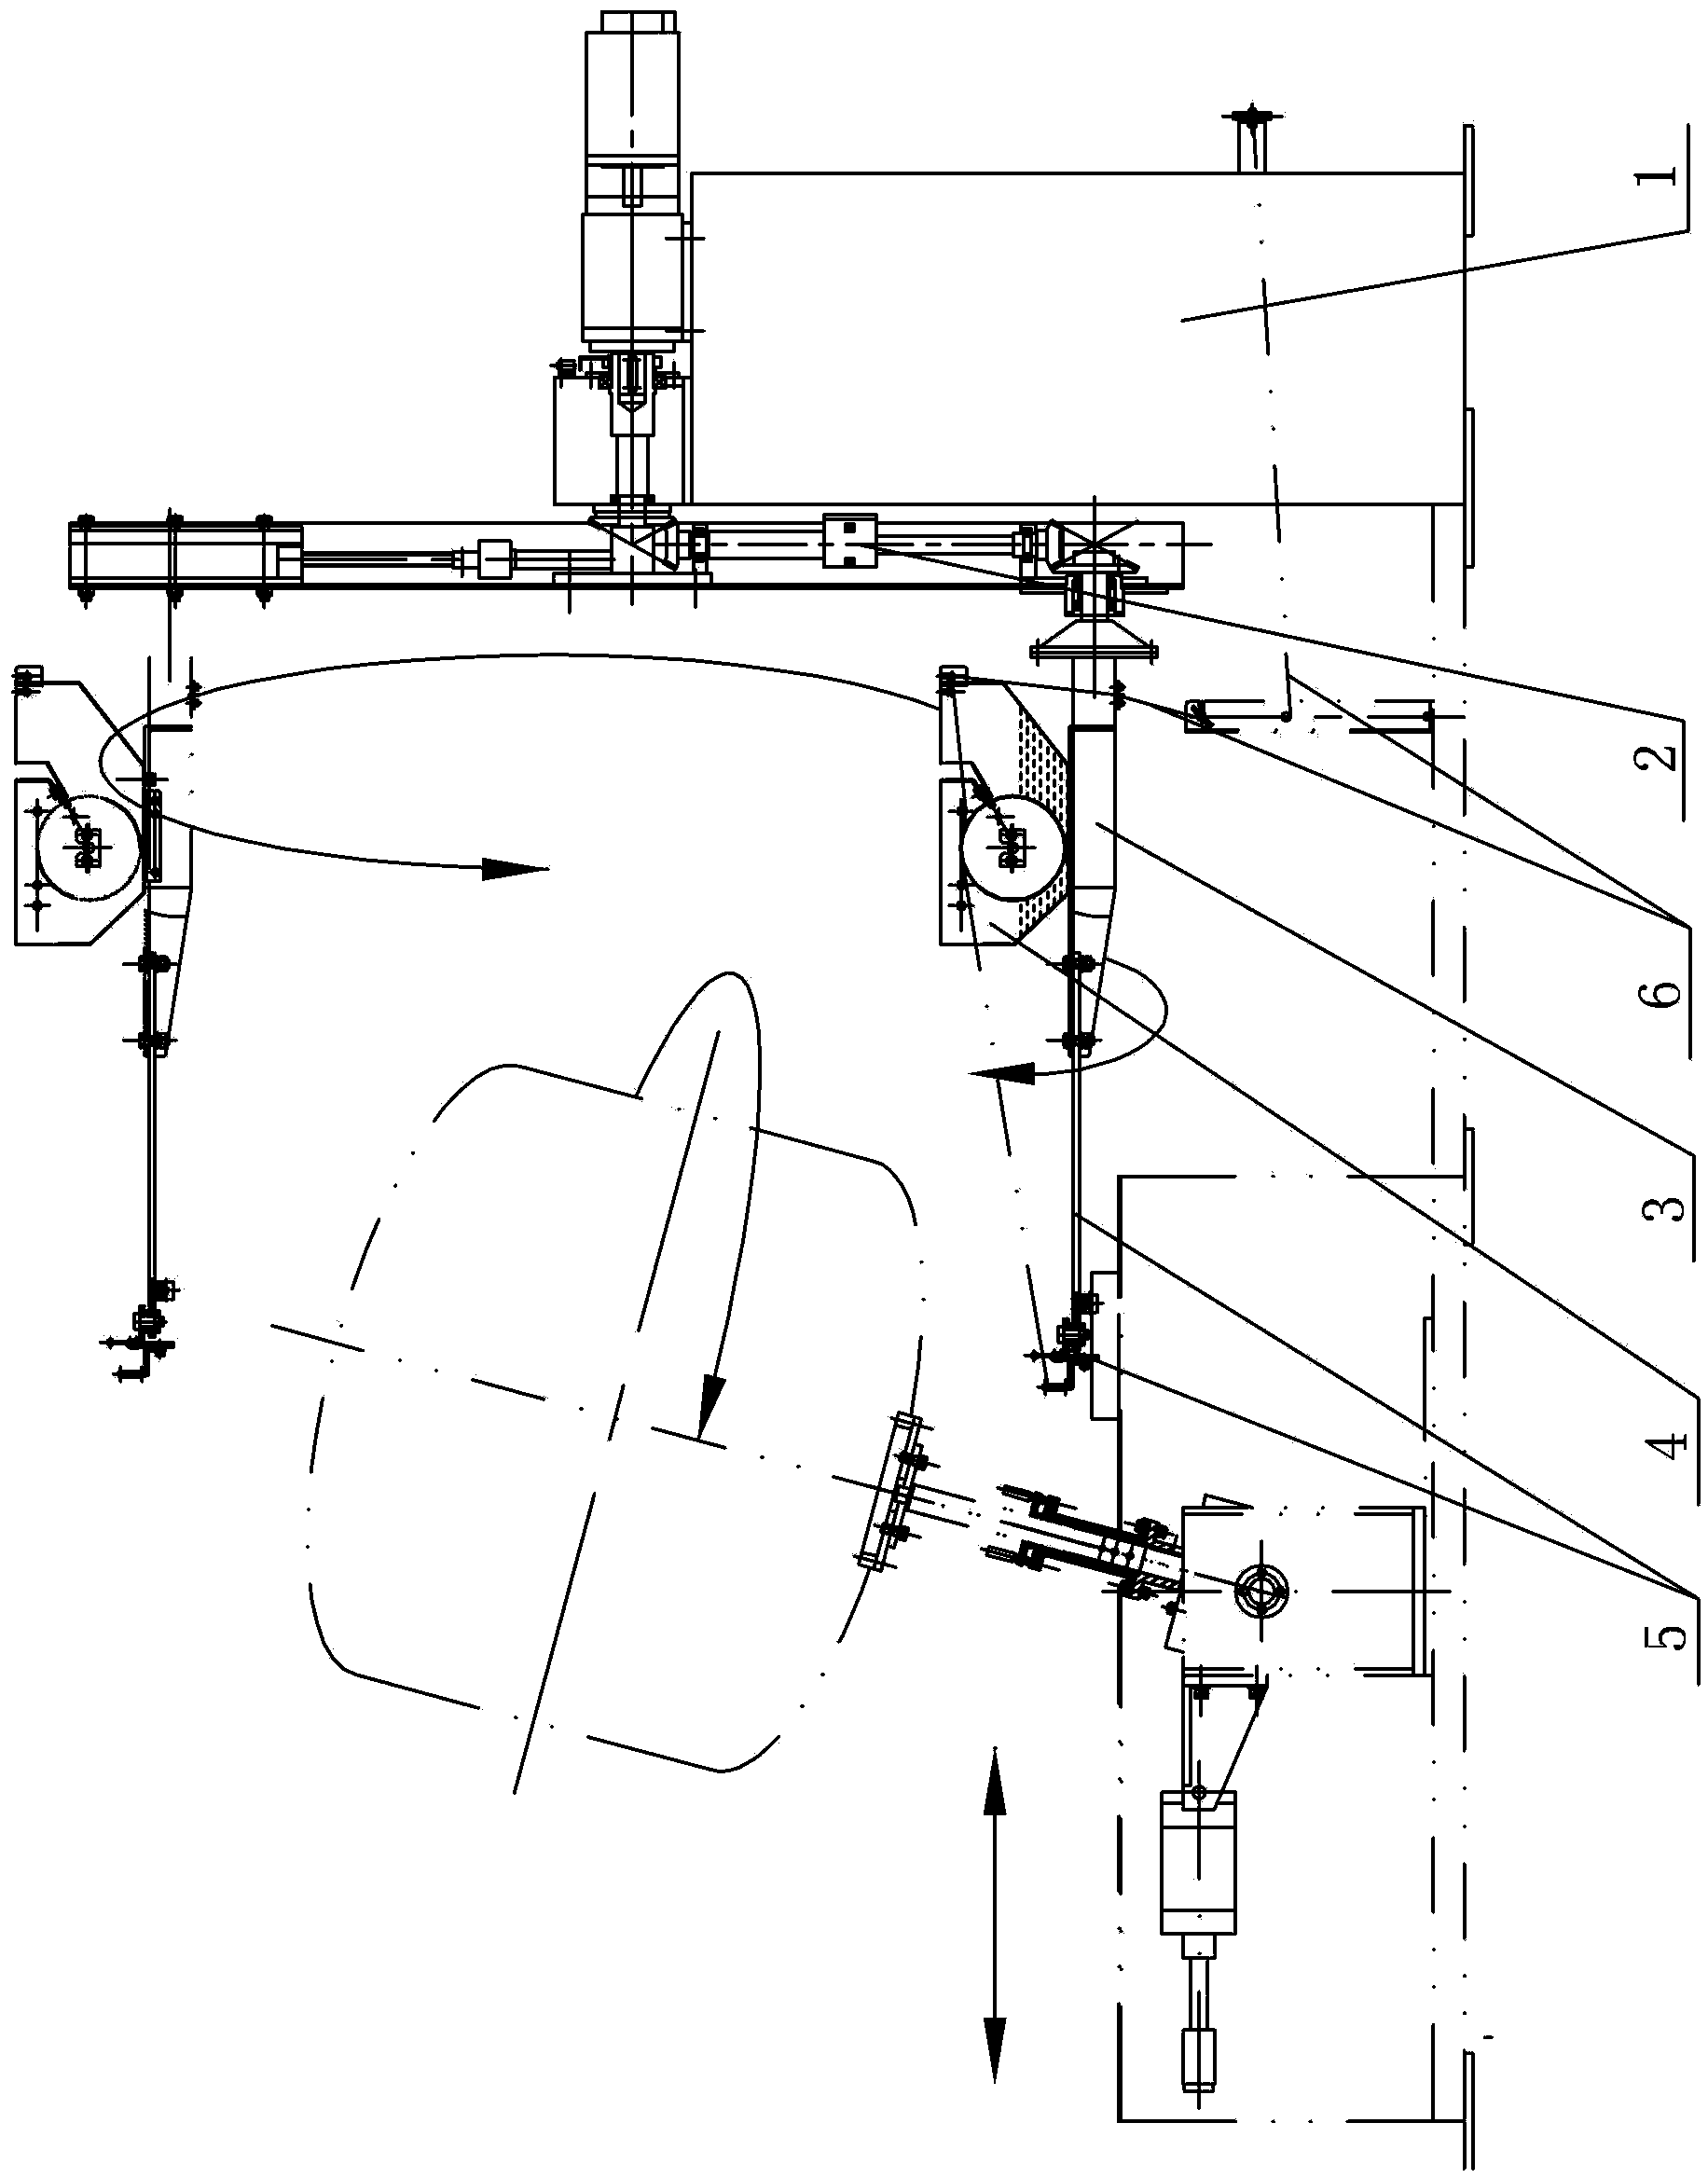 Vertical wet-process winding device